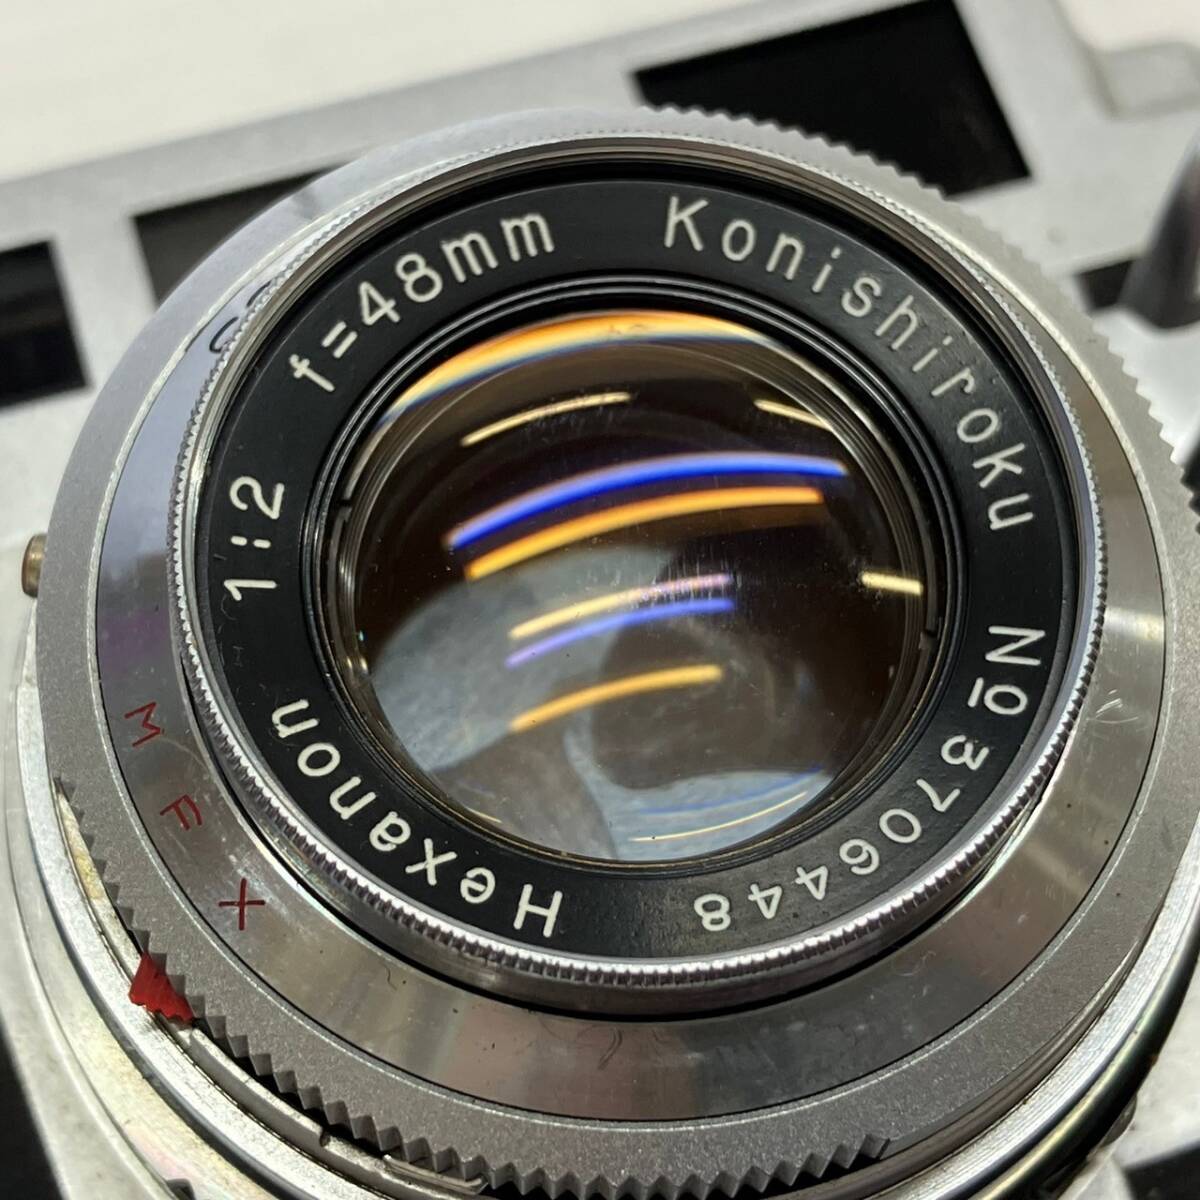 5203-2A Konica Konica III A 1:2 48. дальномер пленочный фотоаппарат 